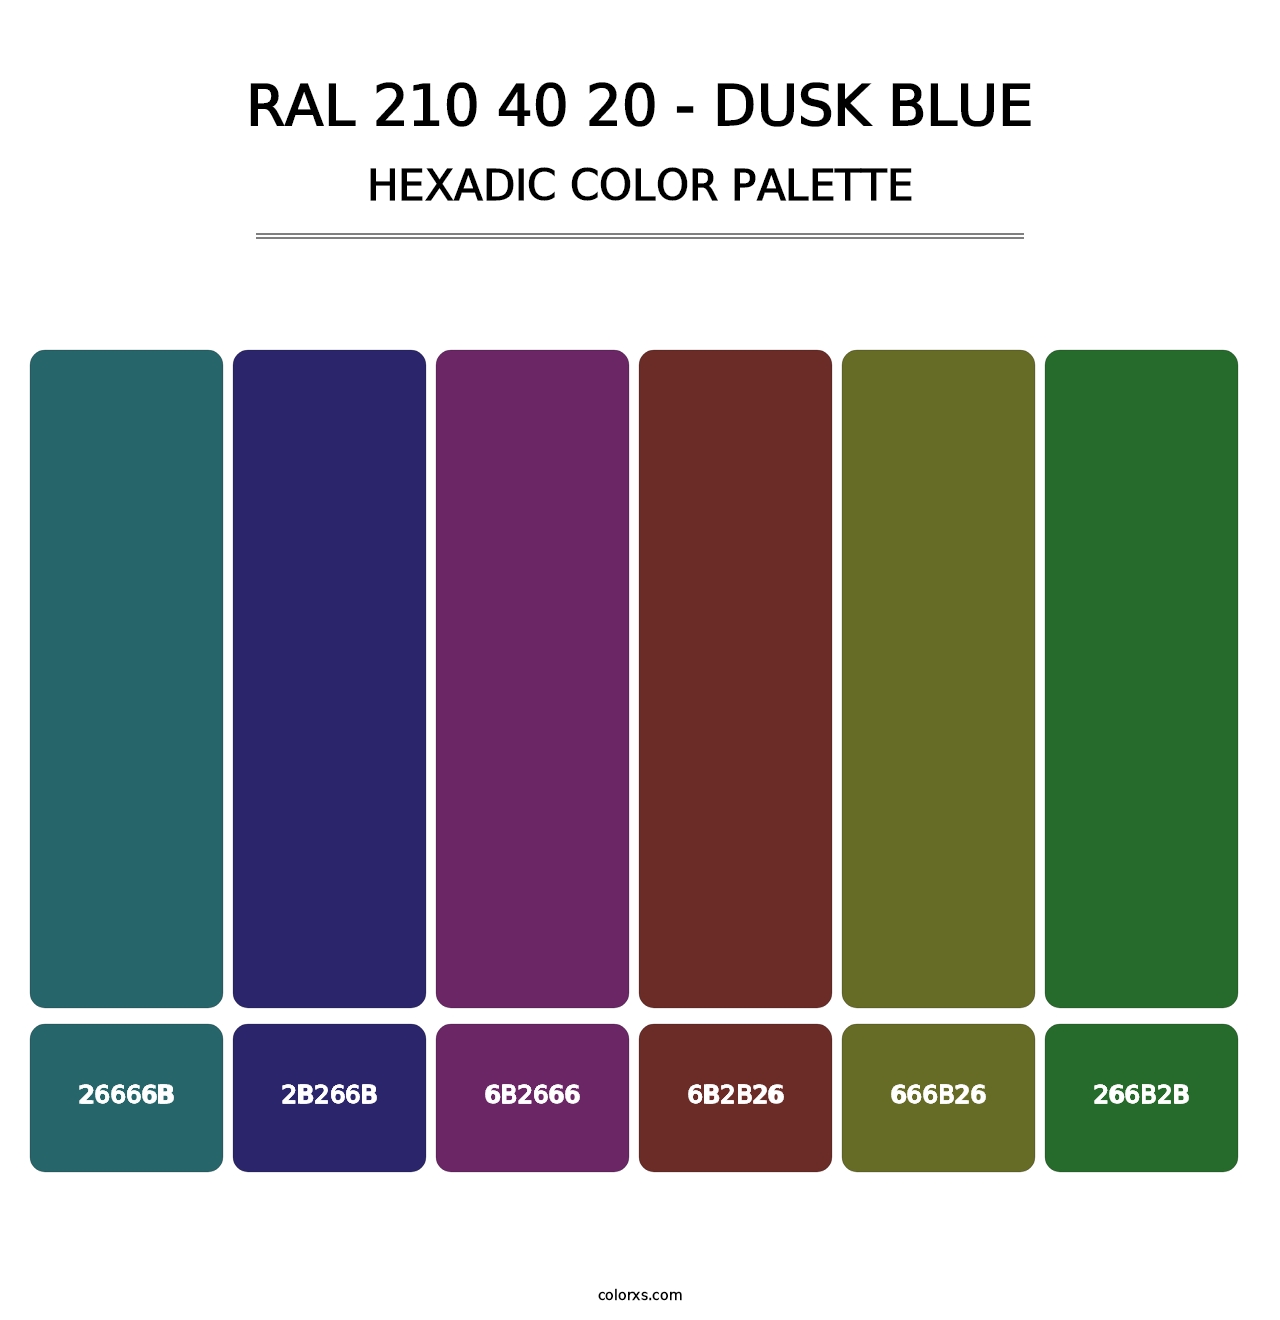 RAL 210 40 20 - Dusk Blue - Hexadic Color Palette